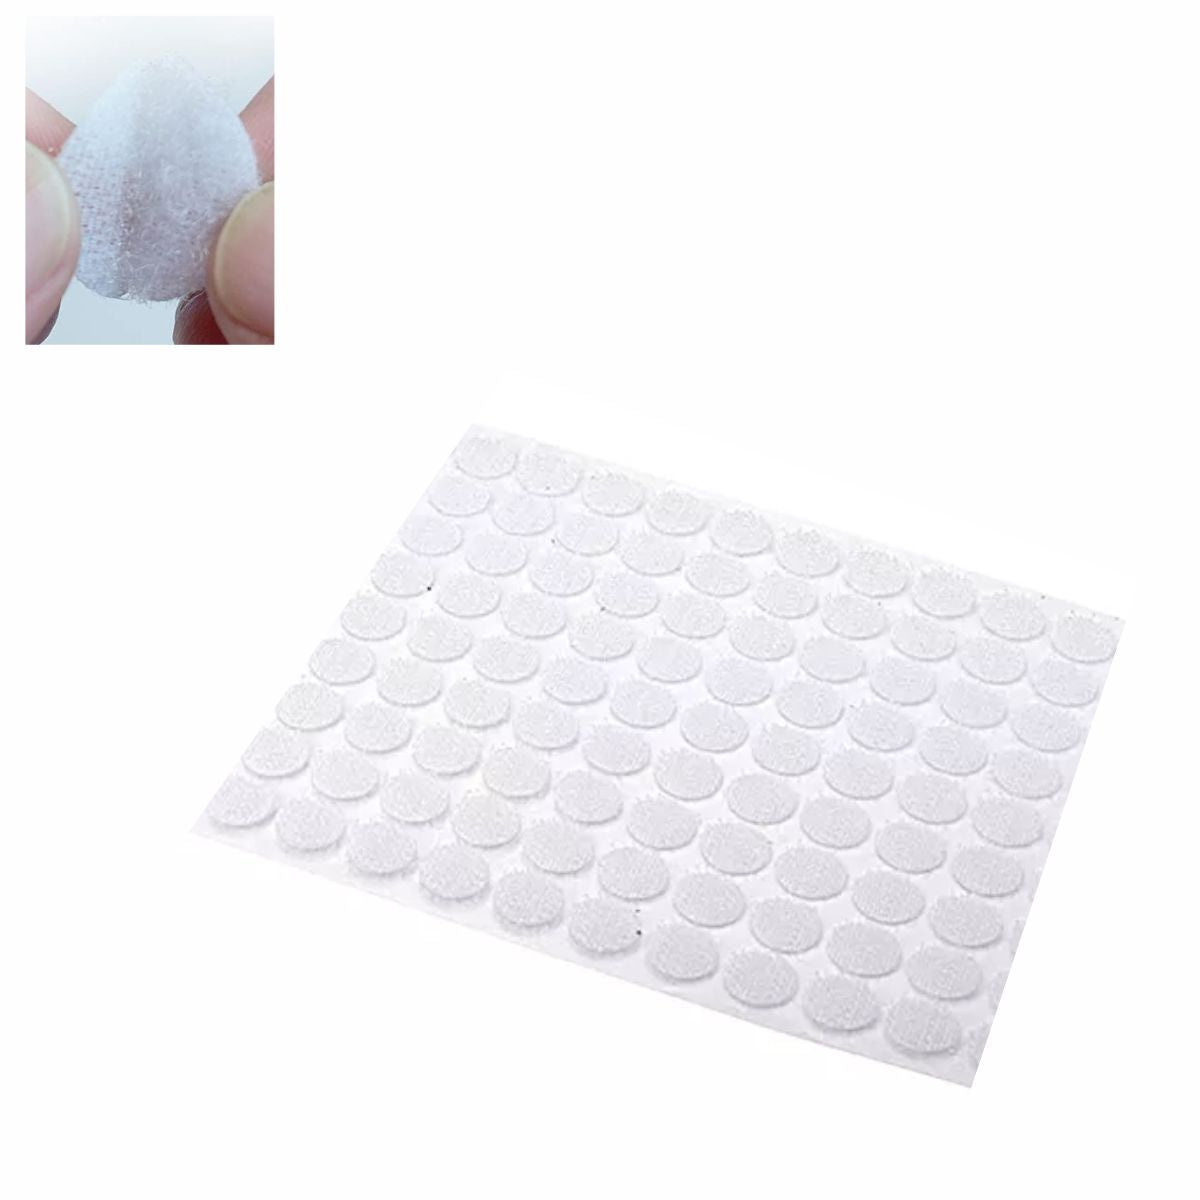 Circulitos de Velcro Adhesivo Blancos de 1cm